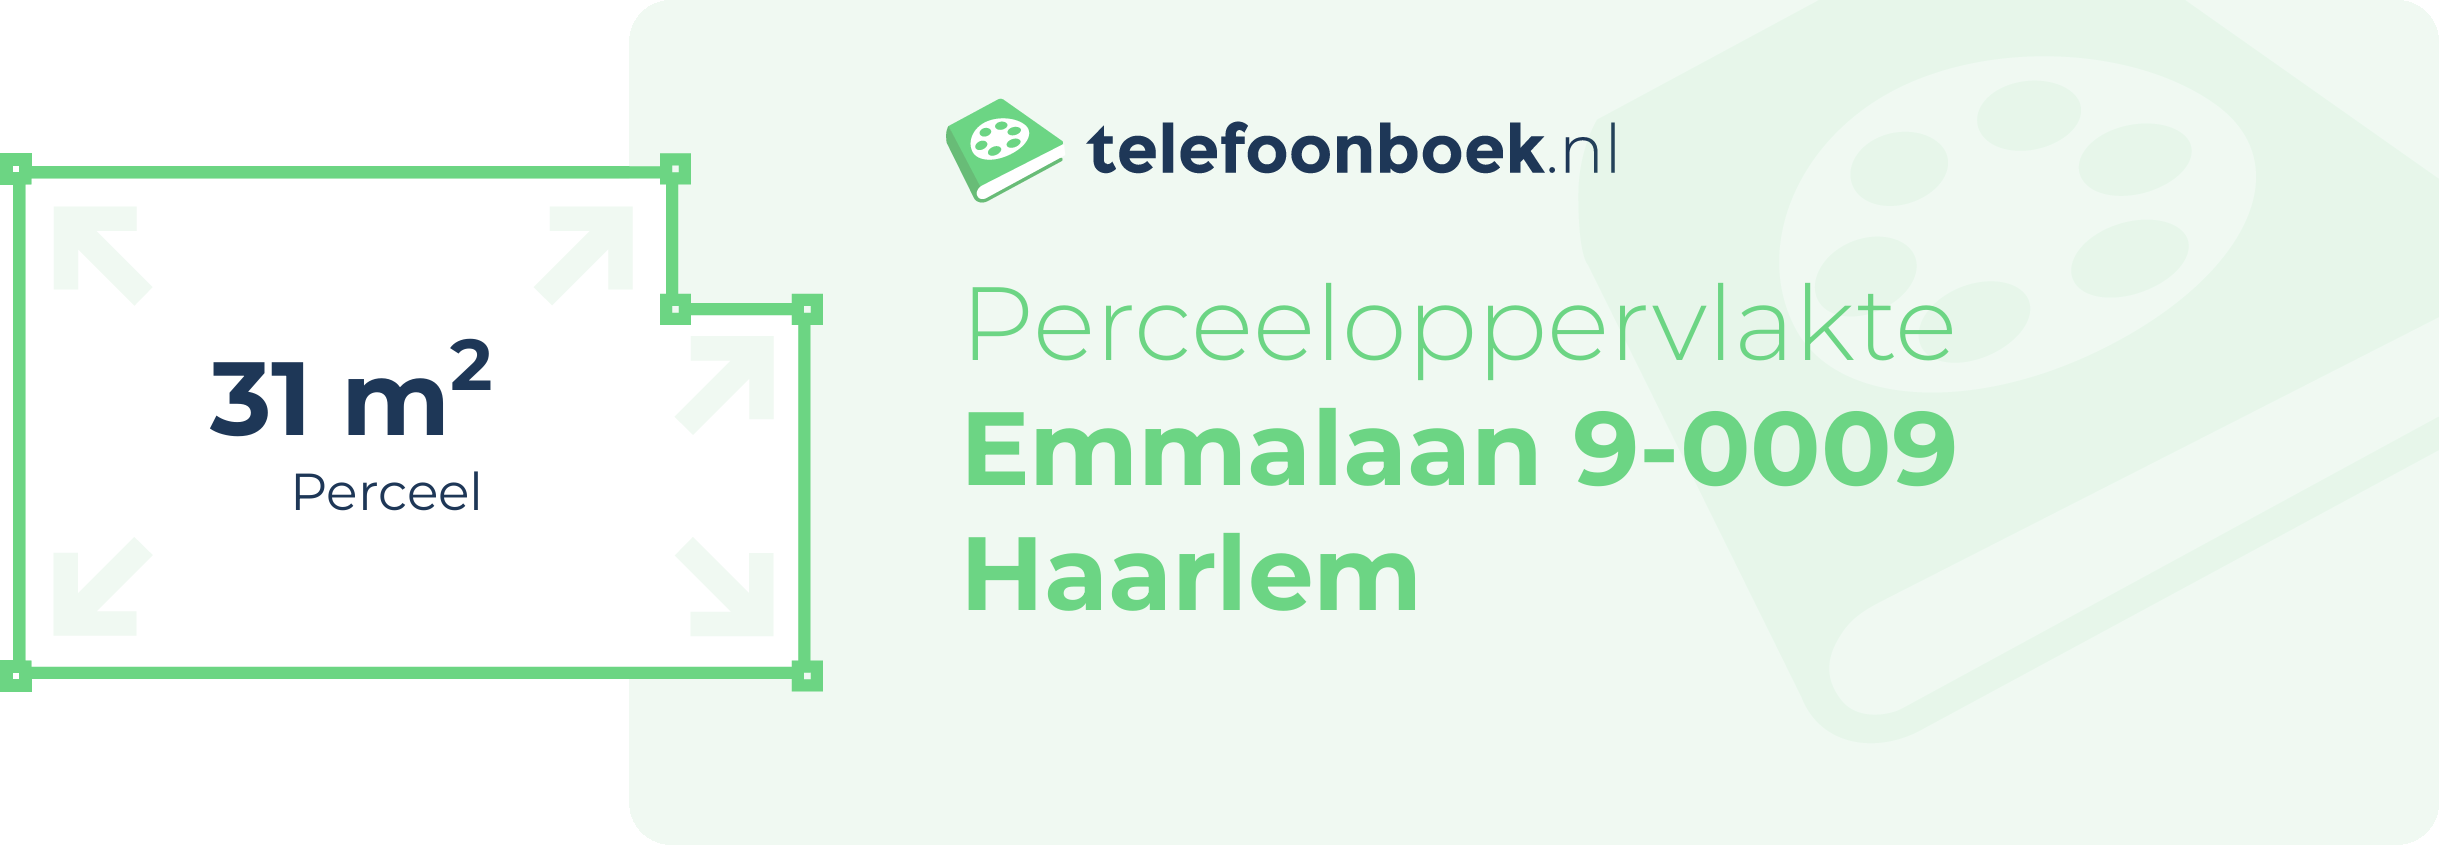 Perceeloppervlakte Emmalaan 9-0009 Haarlem